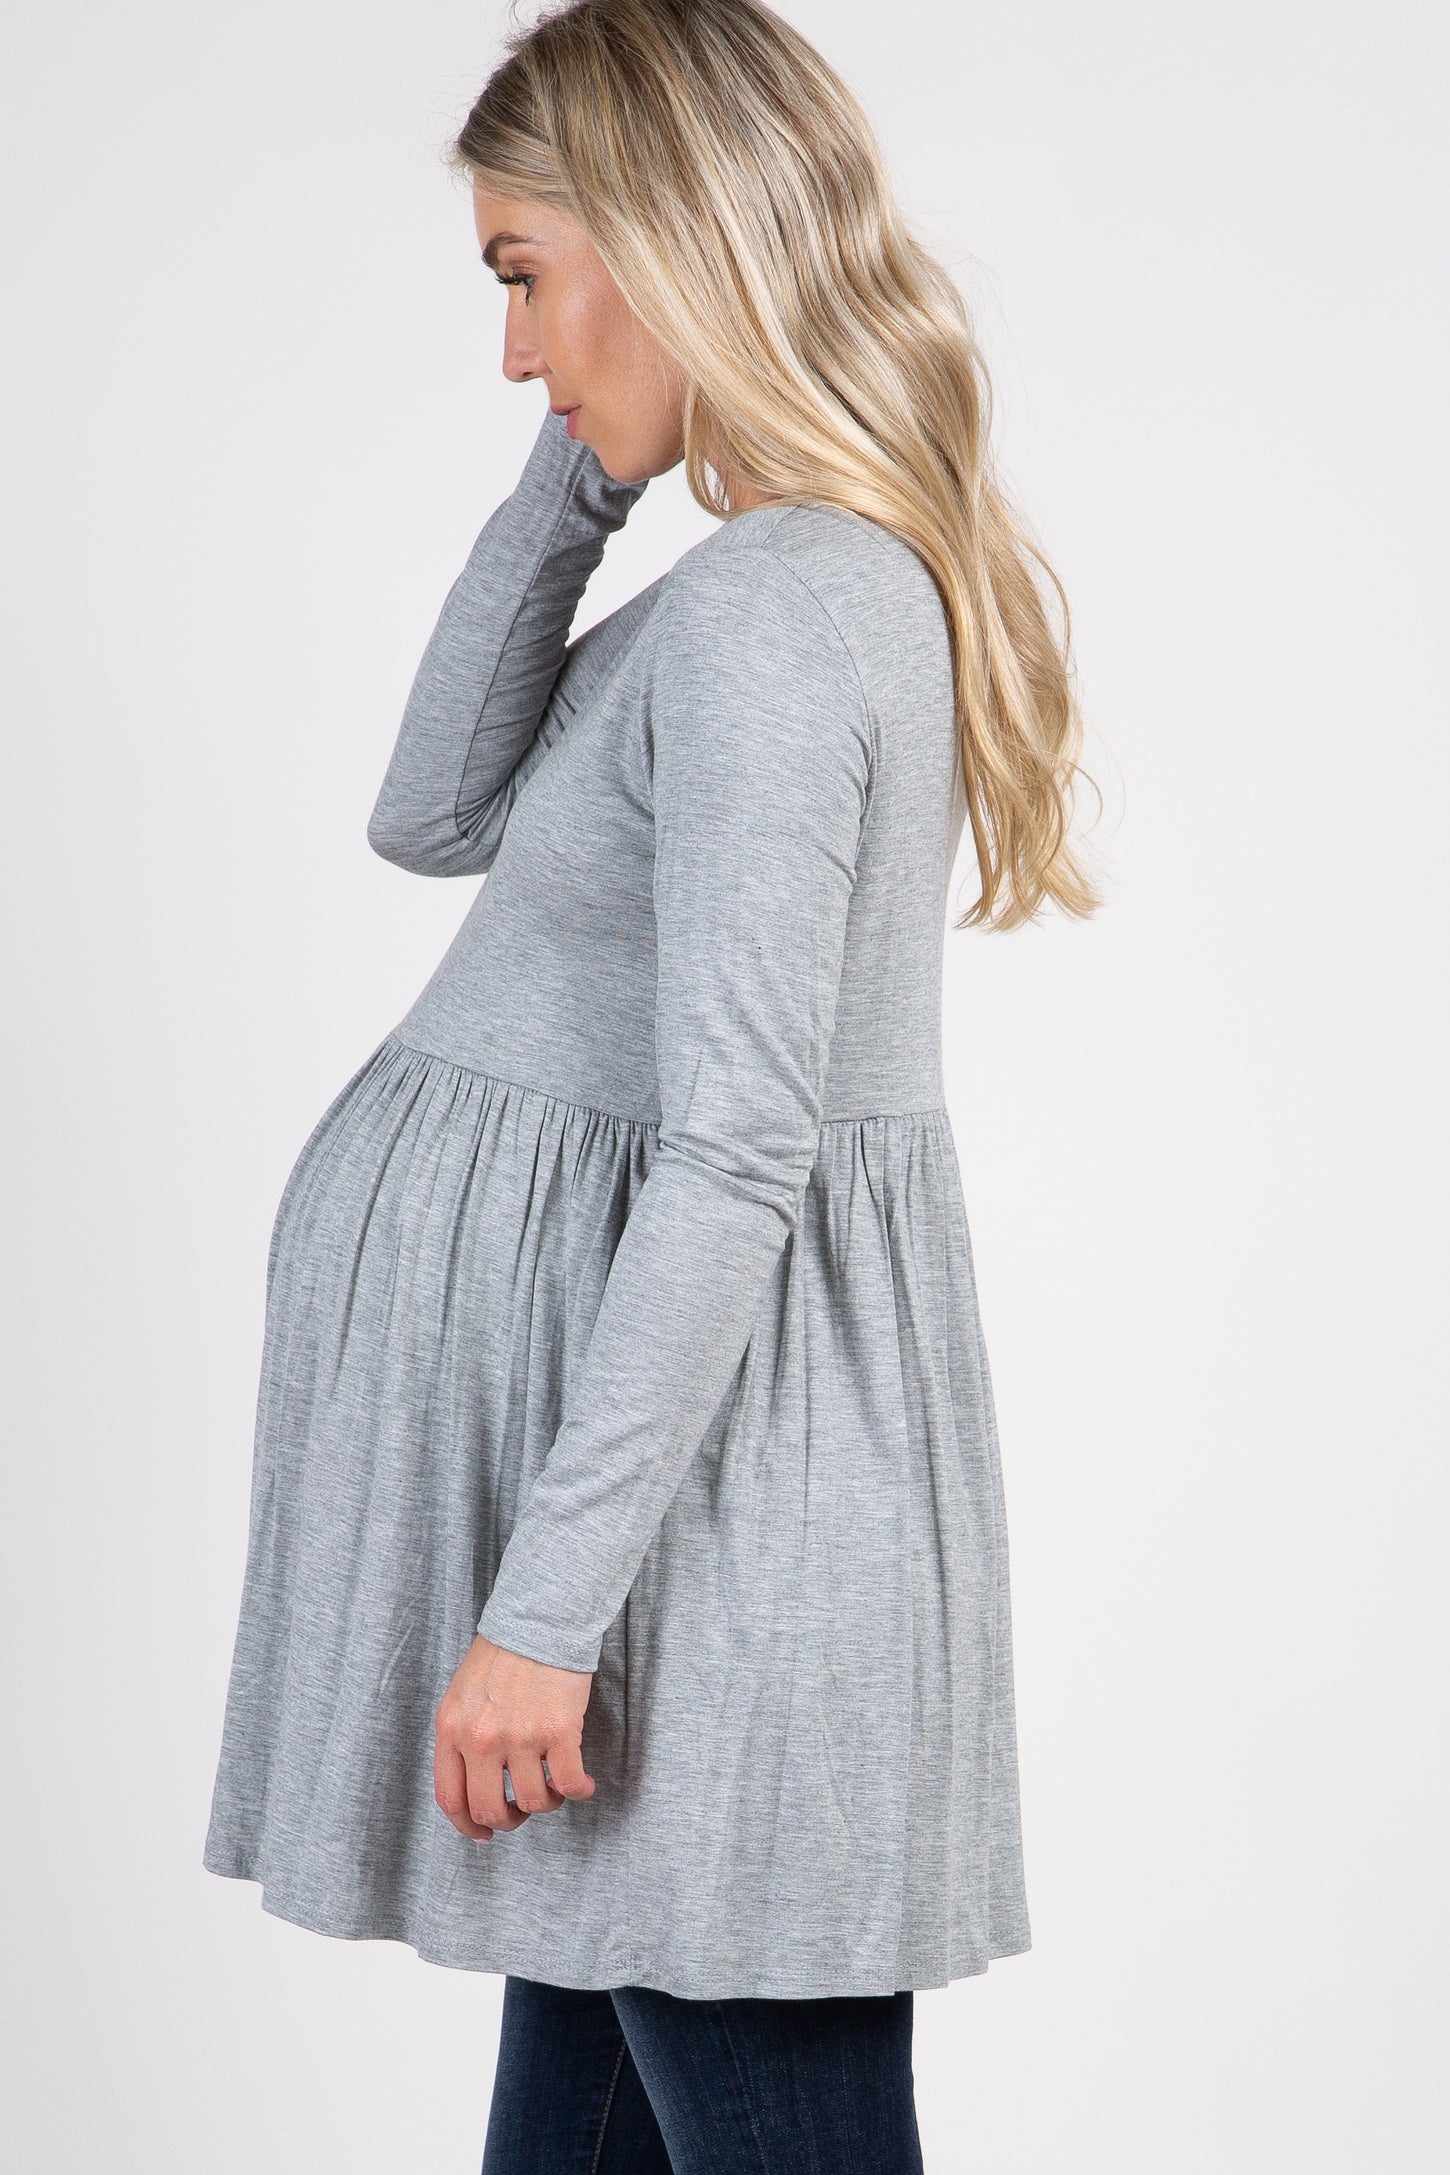 Heather Grey Solid Long Sleeve Peplum Maternity Top